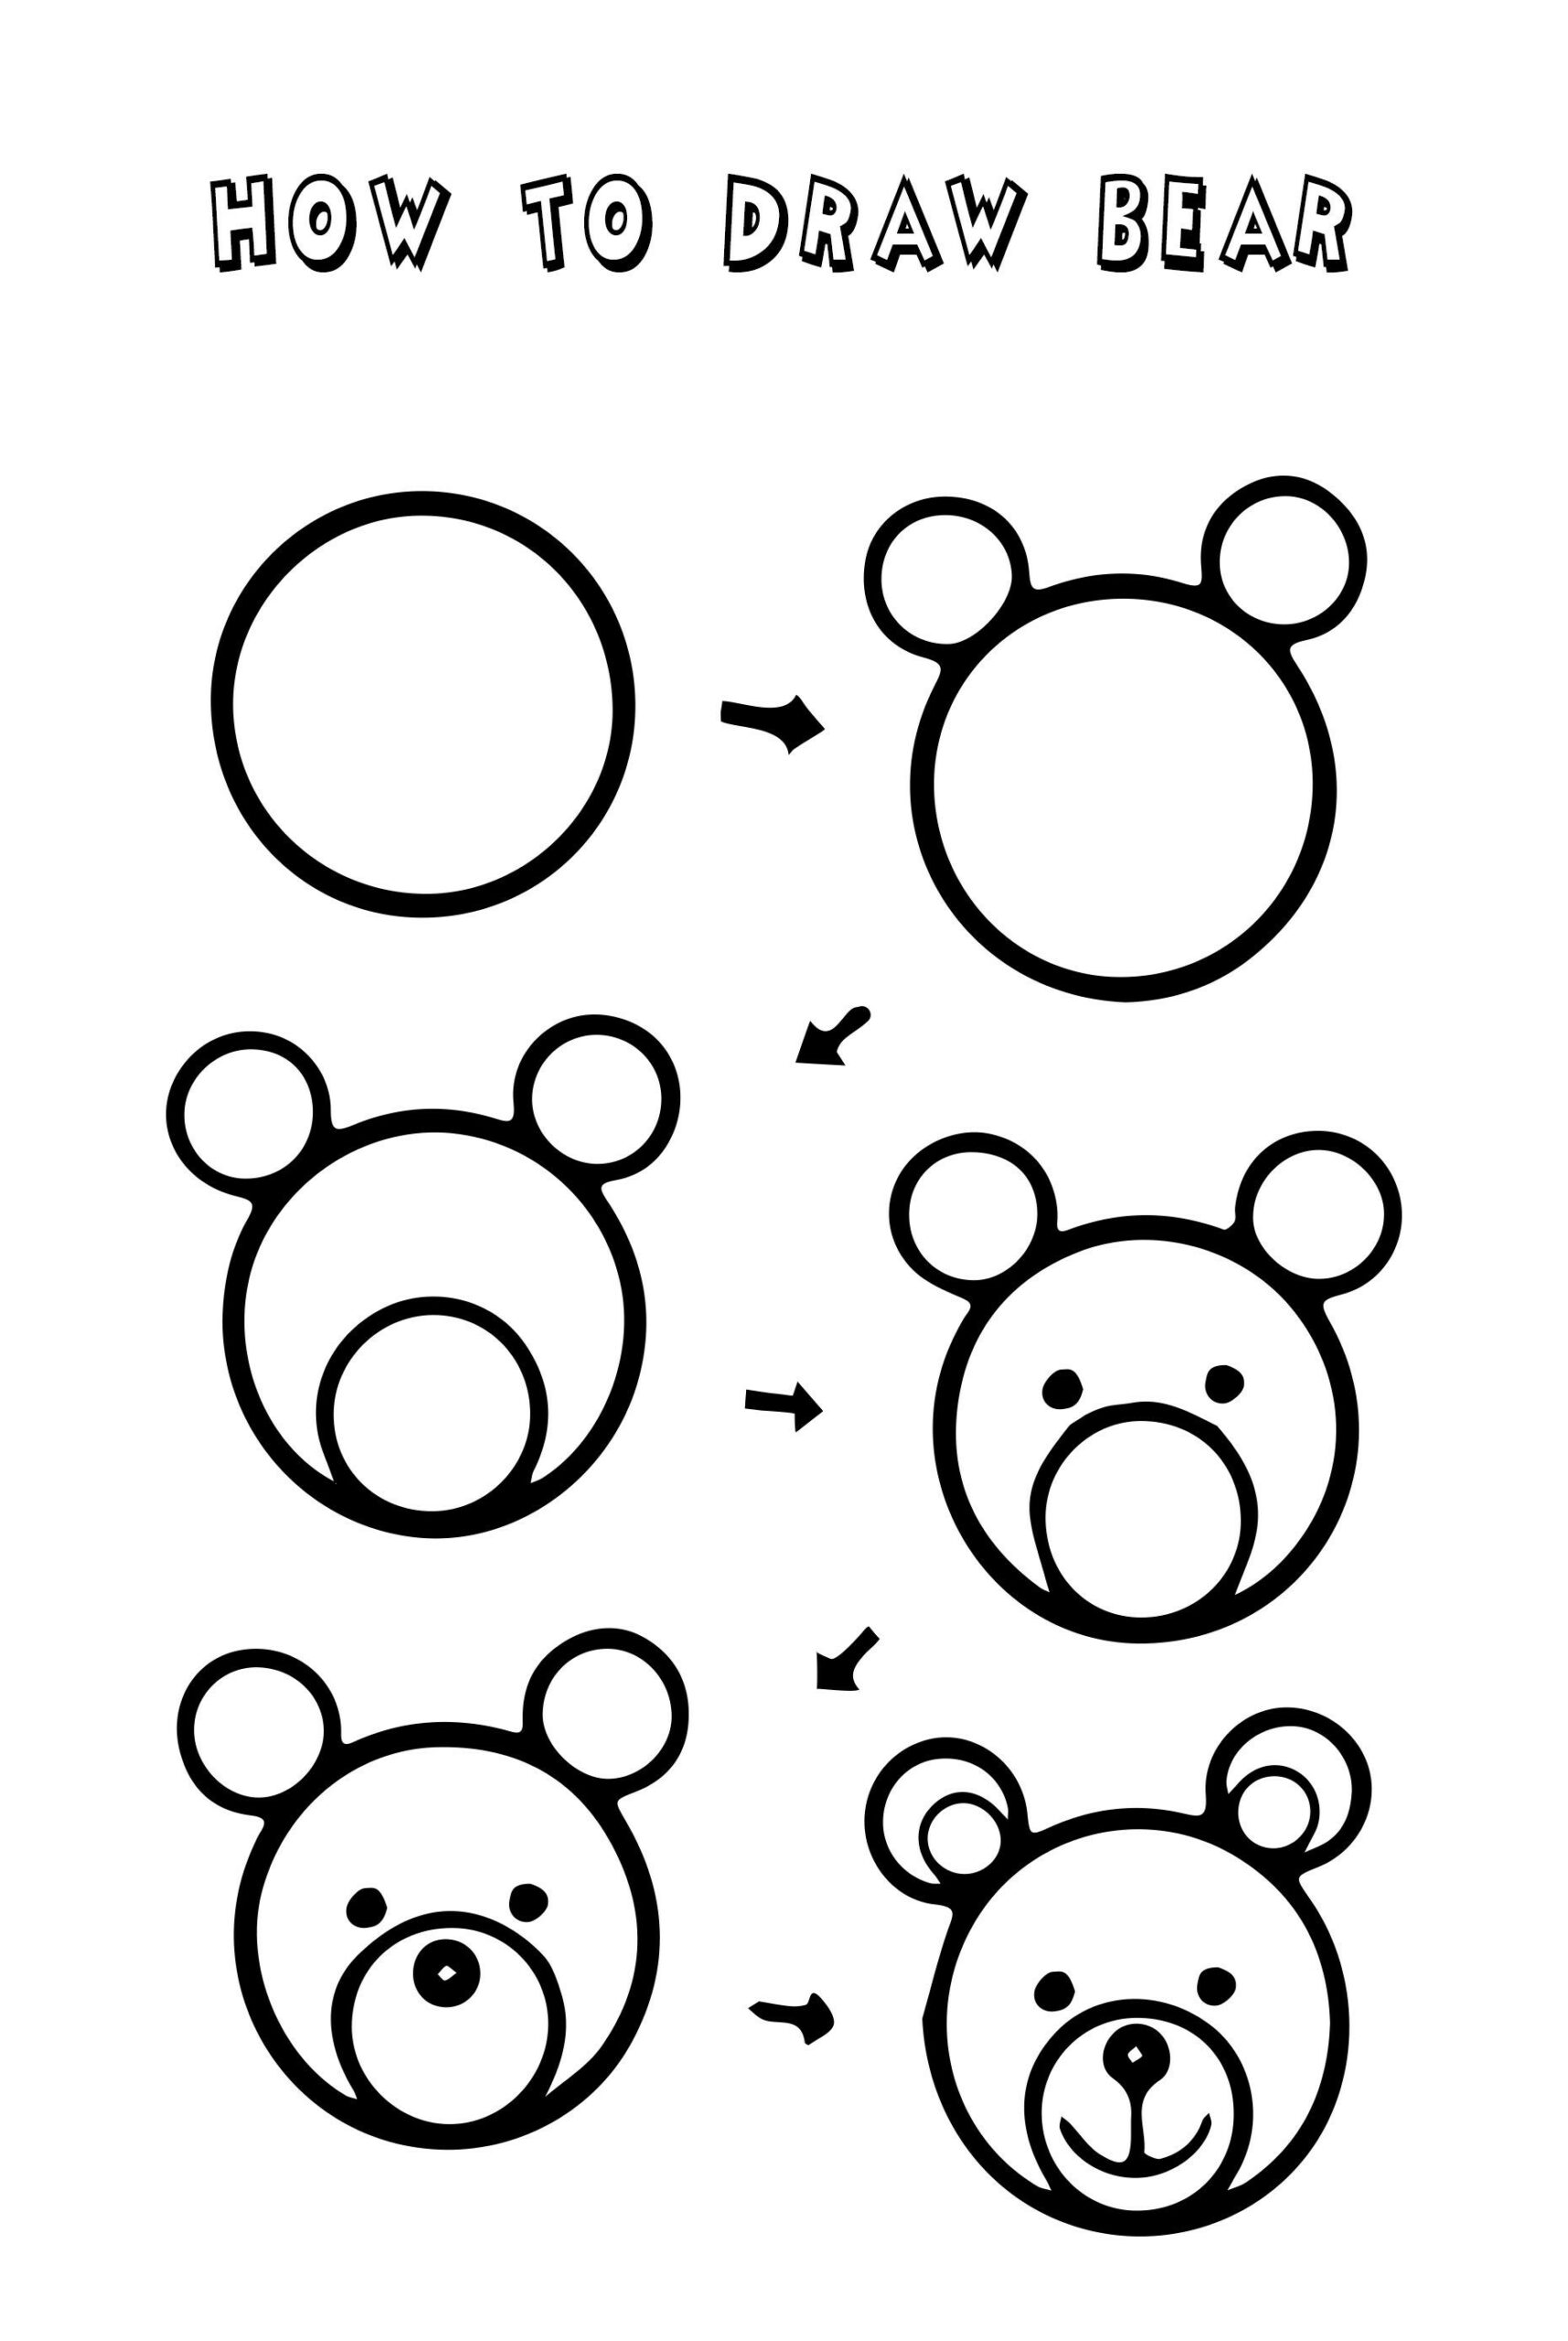 How to draw Bear’s head